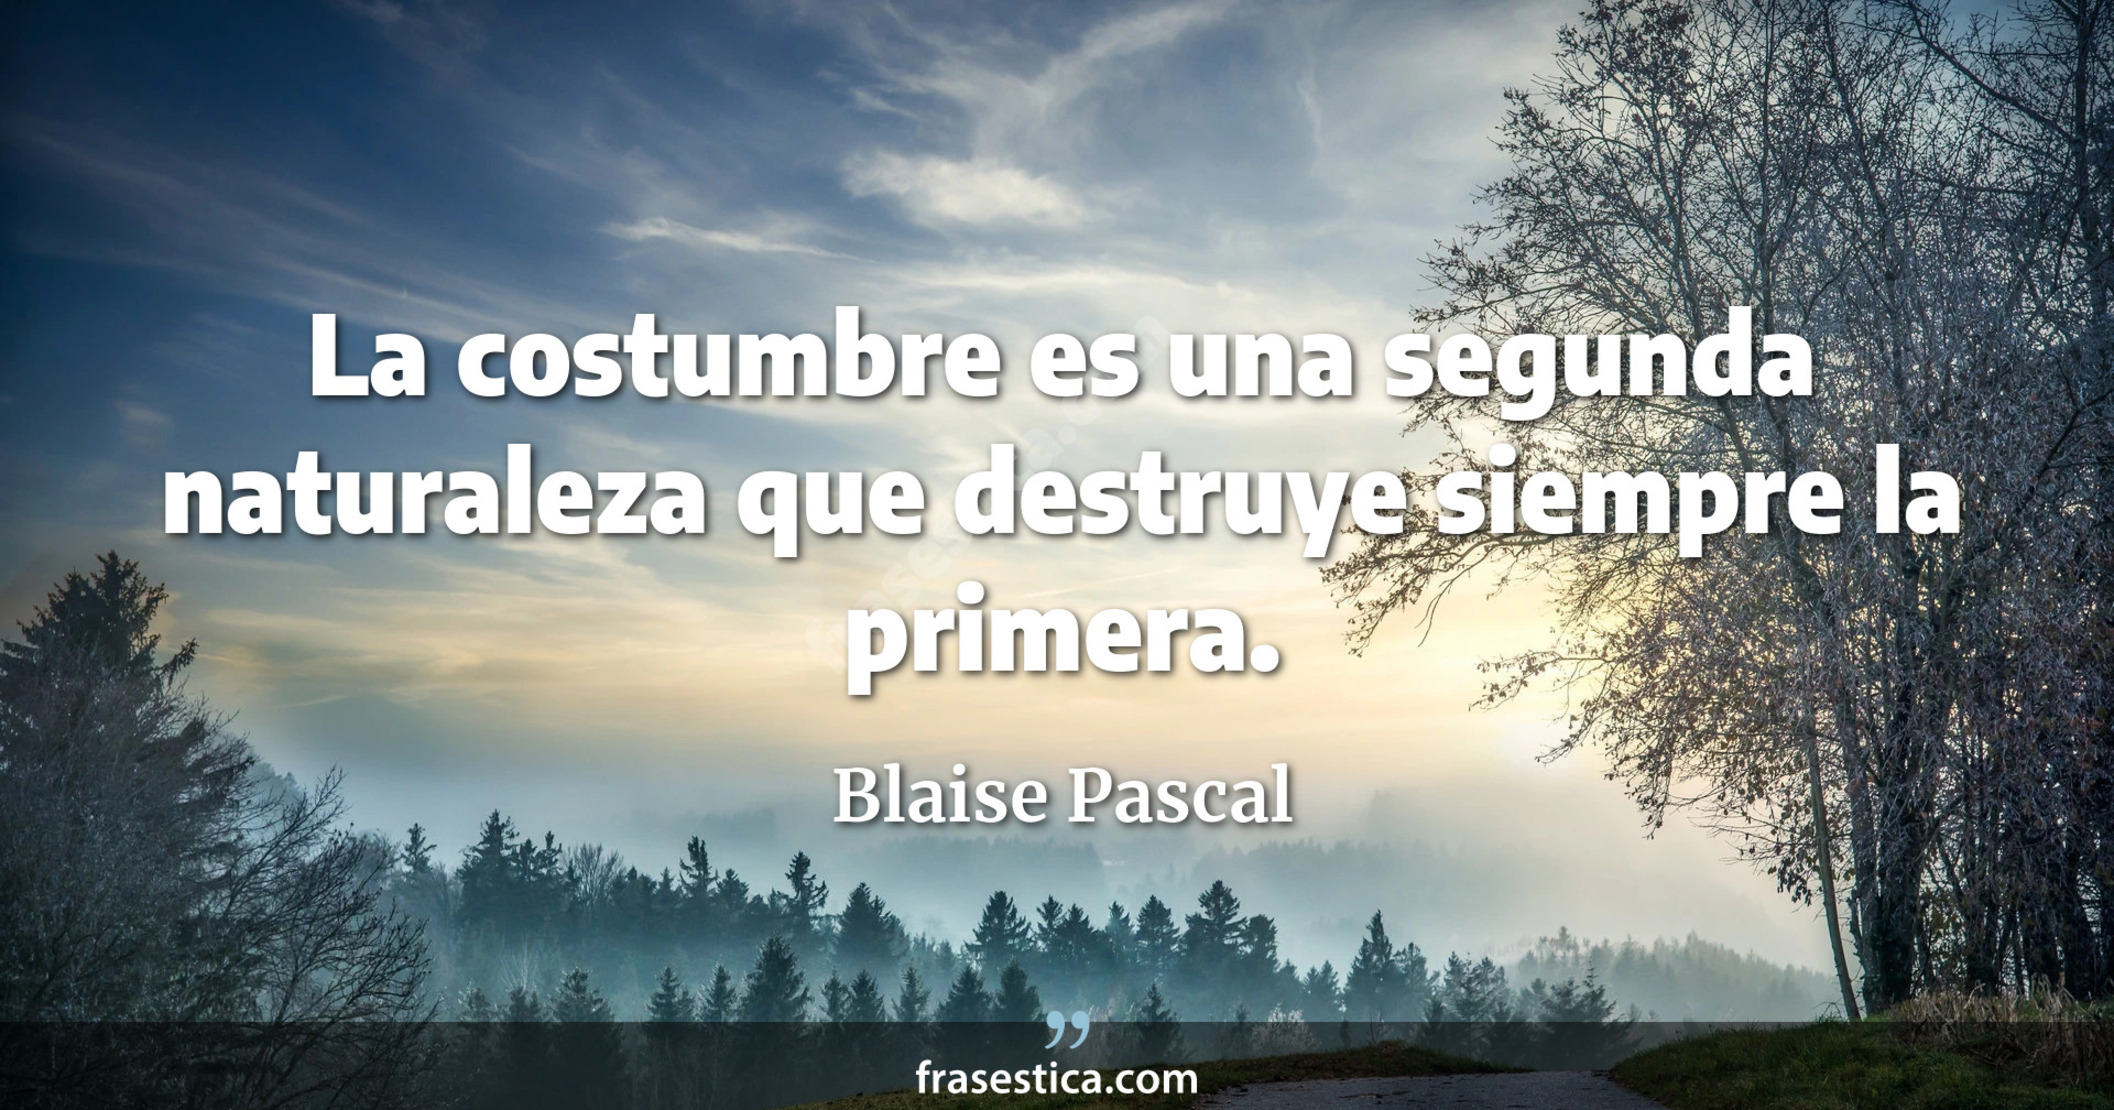 La costumbre es una segunda naturaleza que destruye siempre la primera. - Blaise Pascal